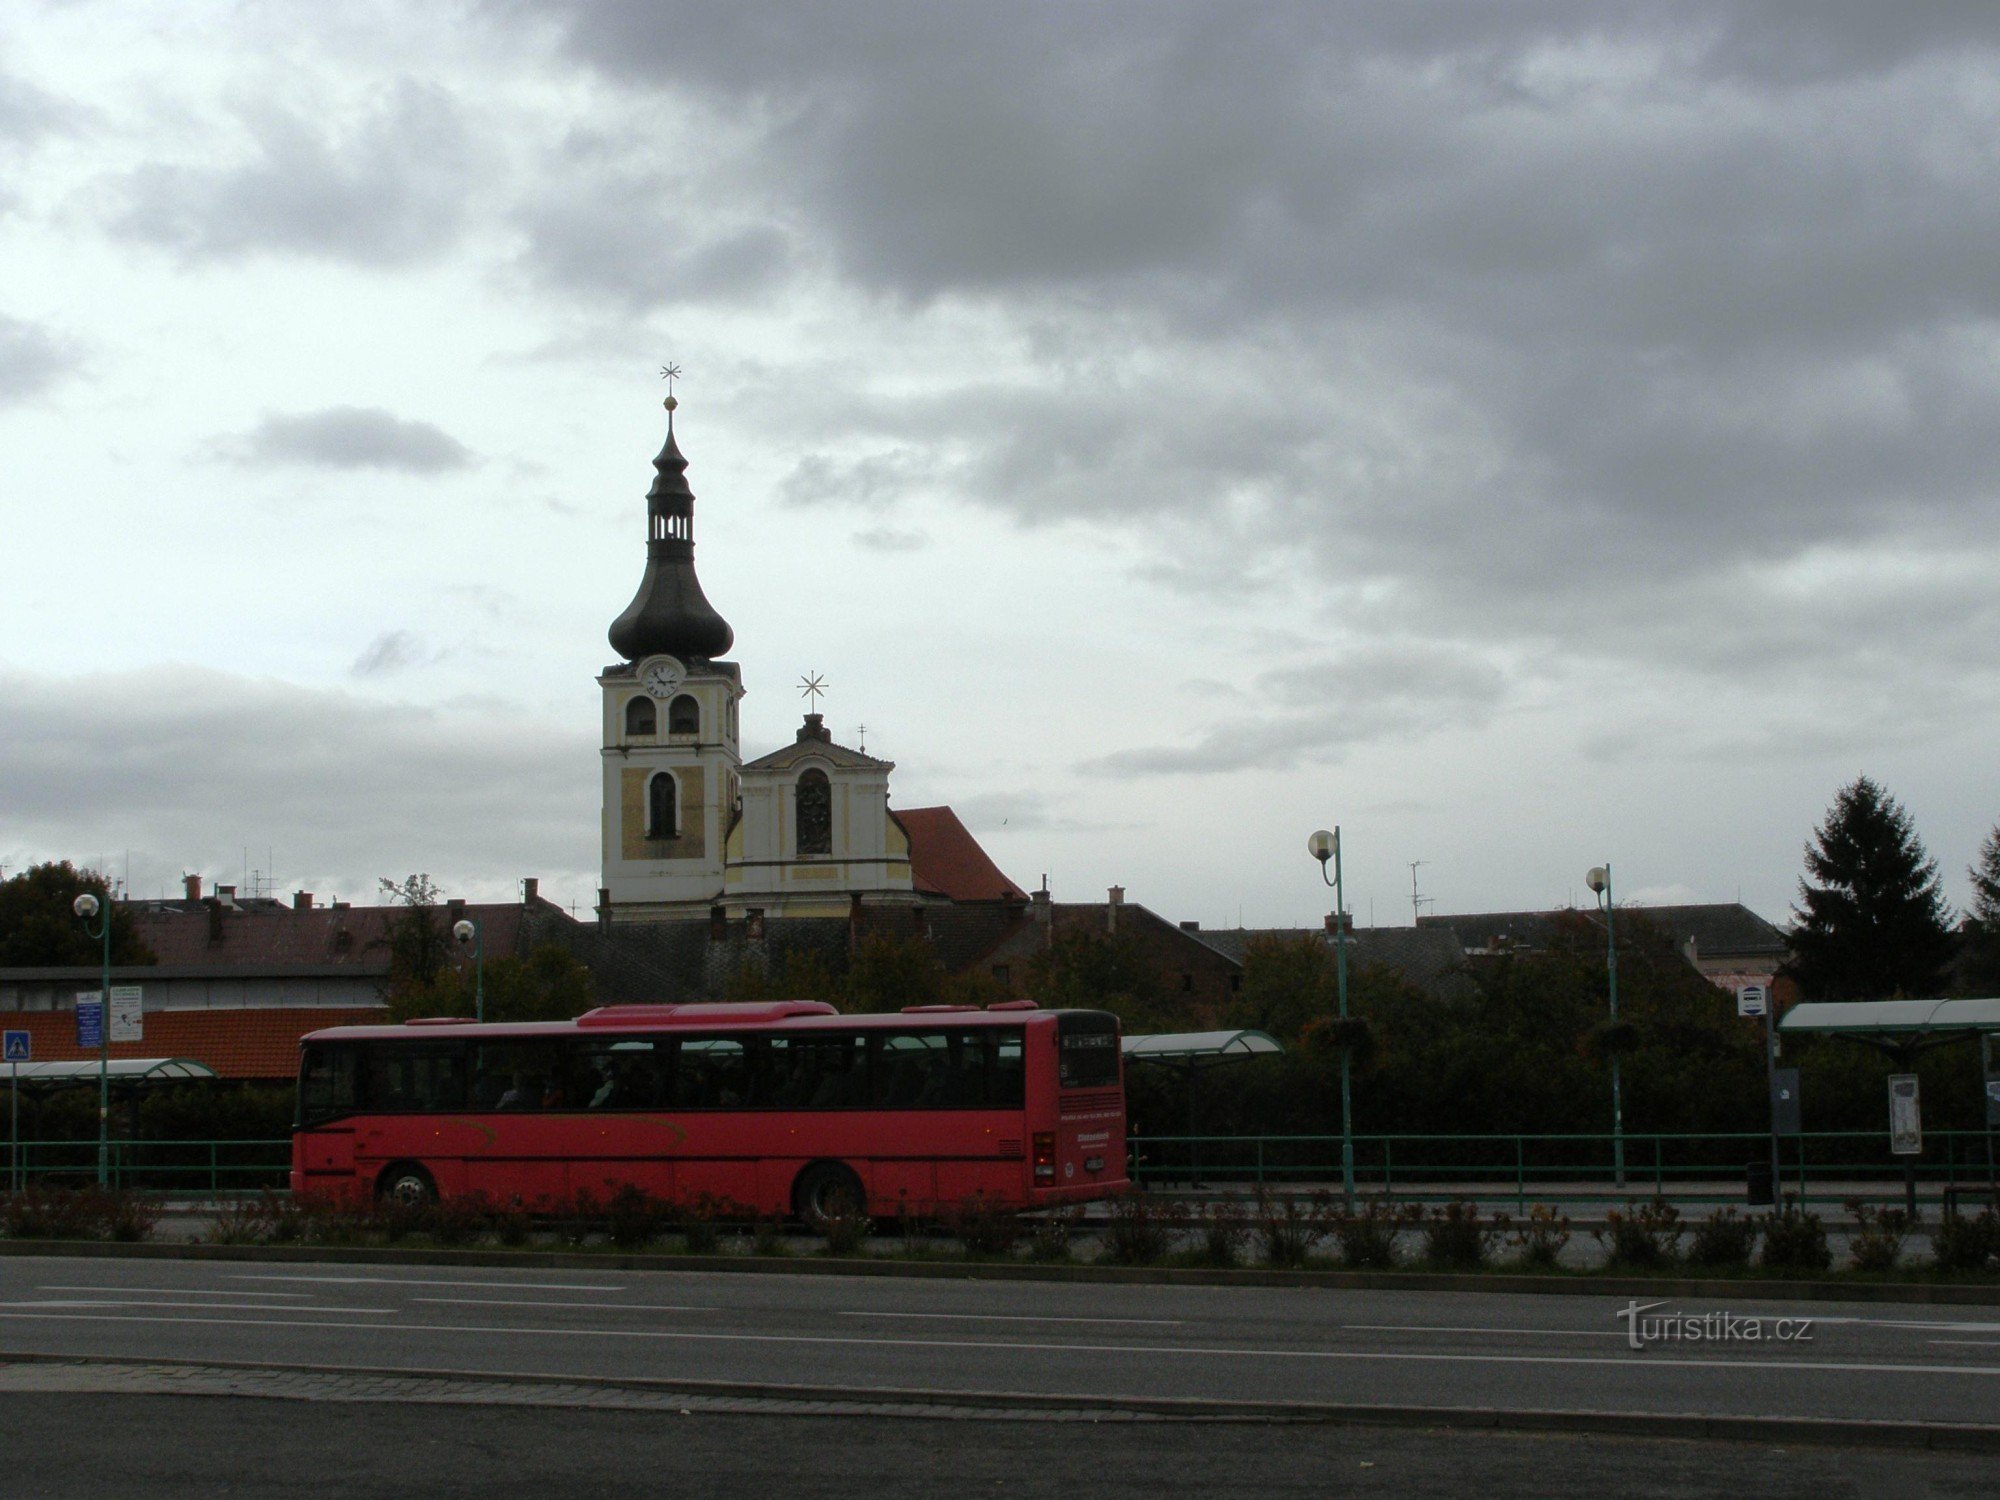 Hořice - gare routière